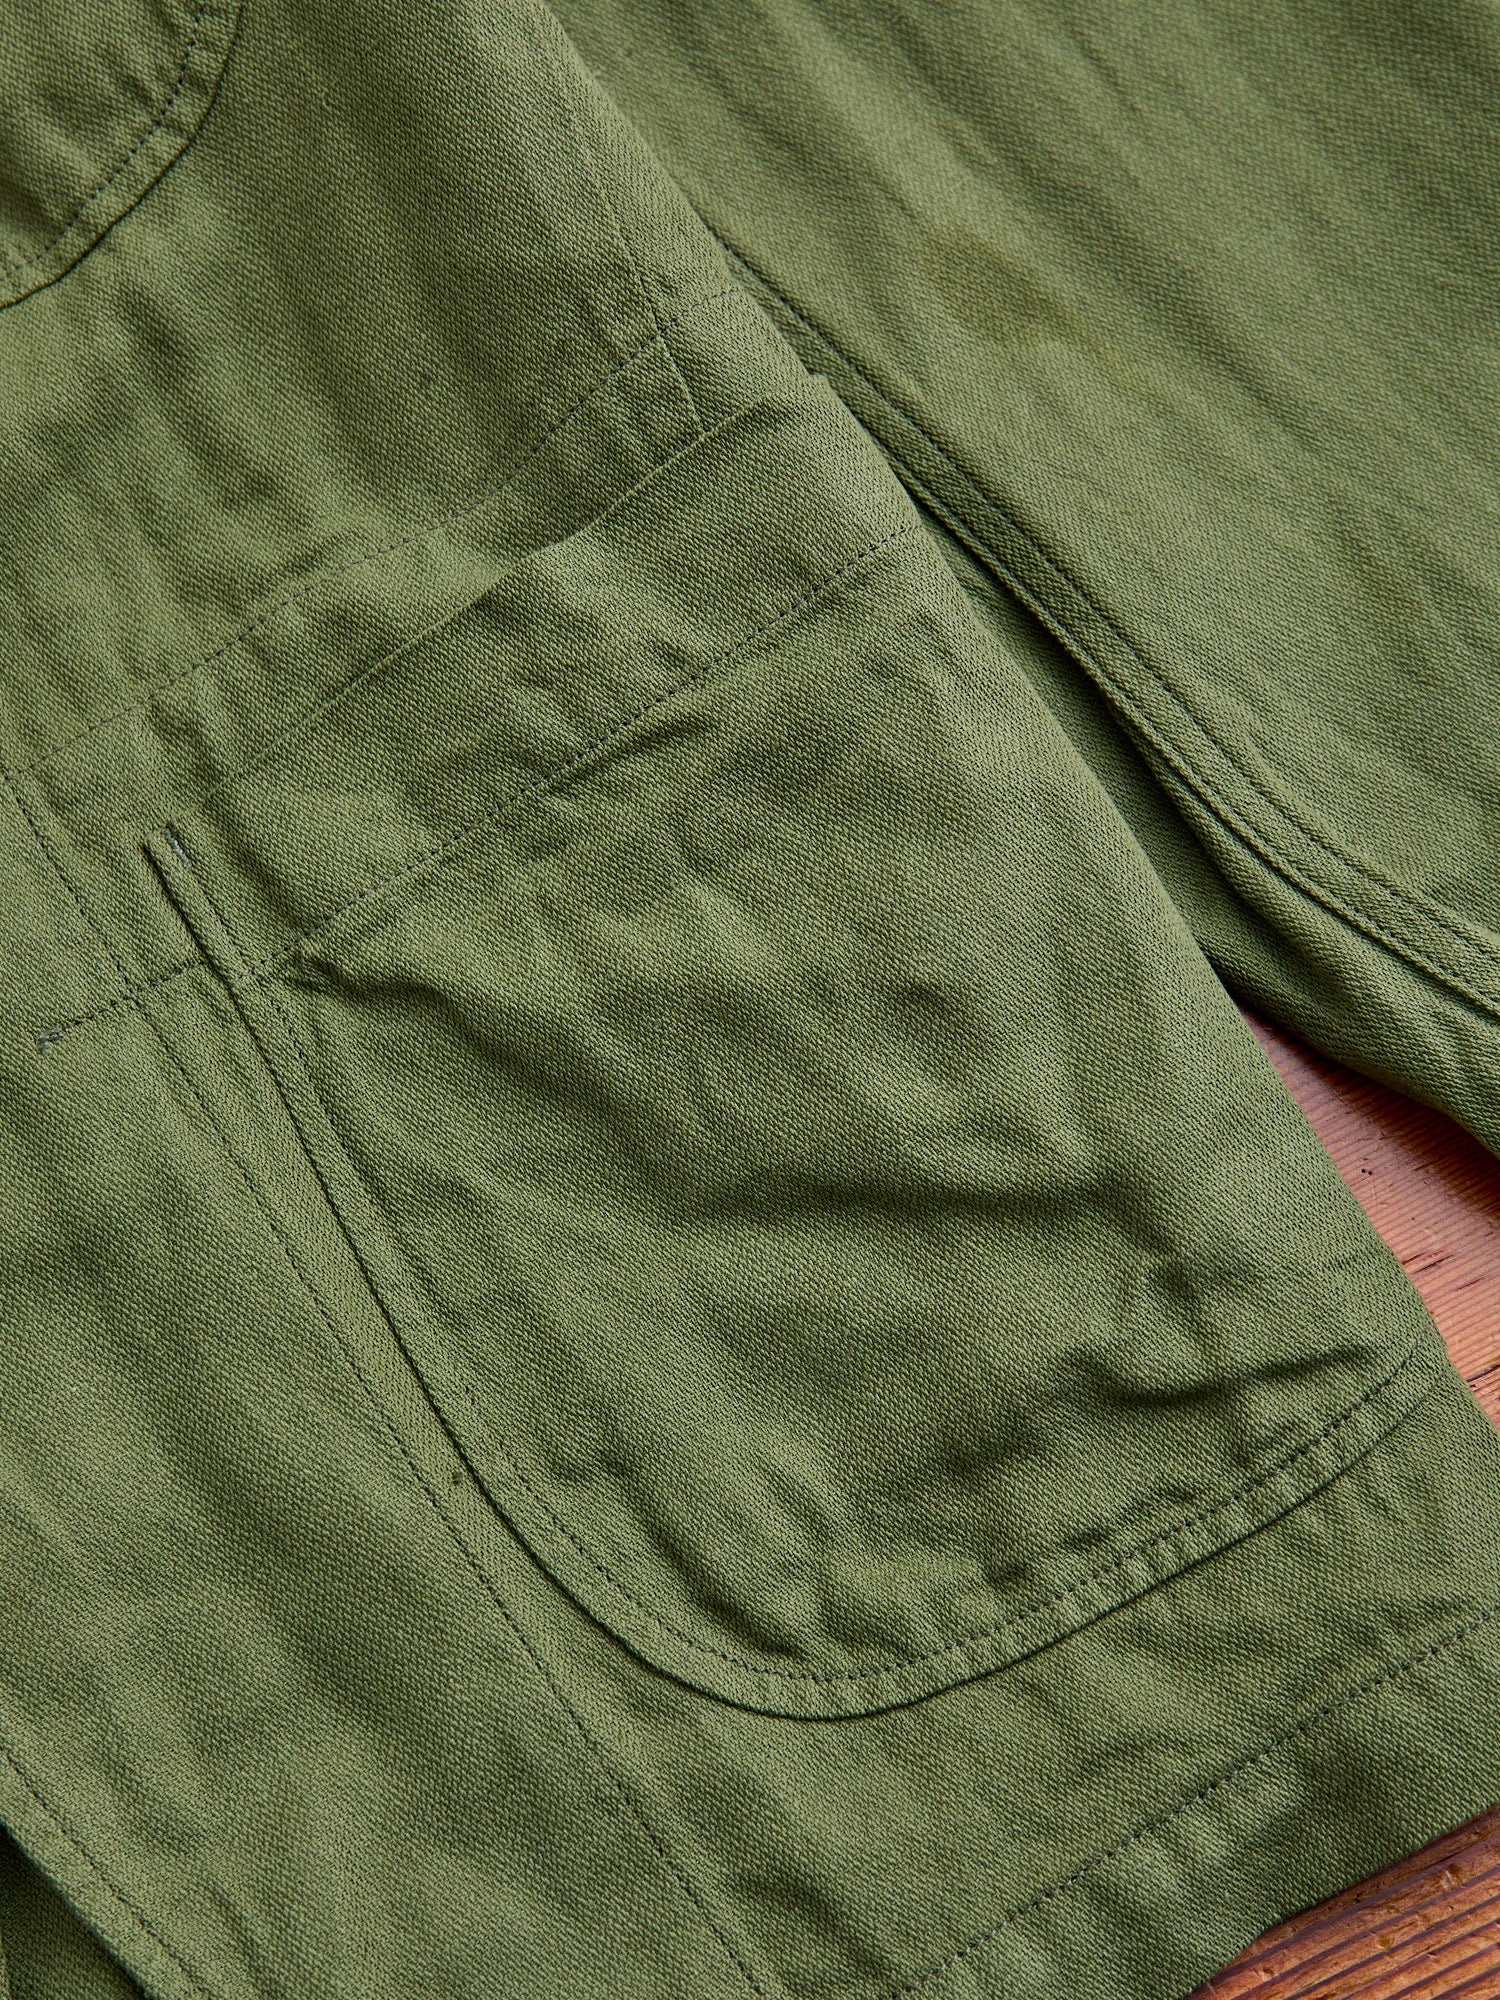 Bedford Jacket in Olive Cotton Hemp Satin - 5